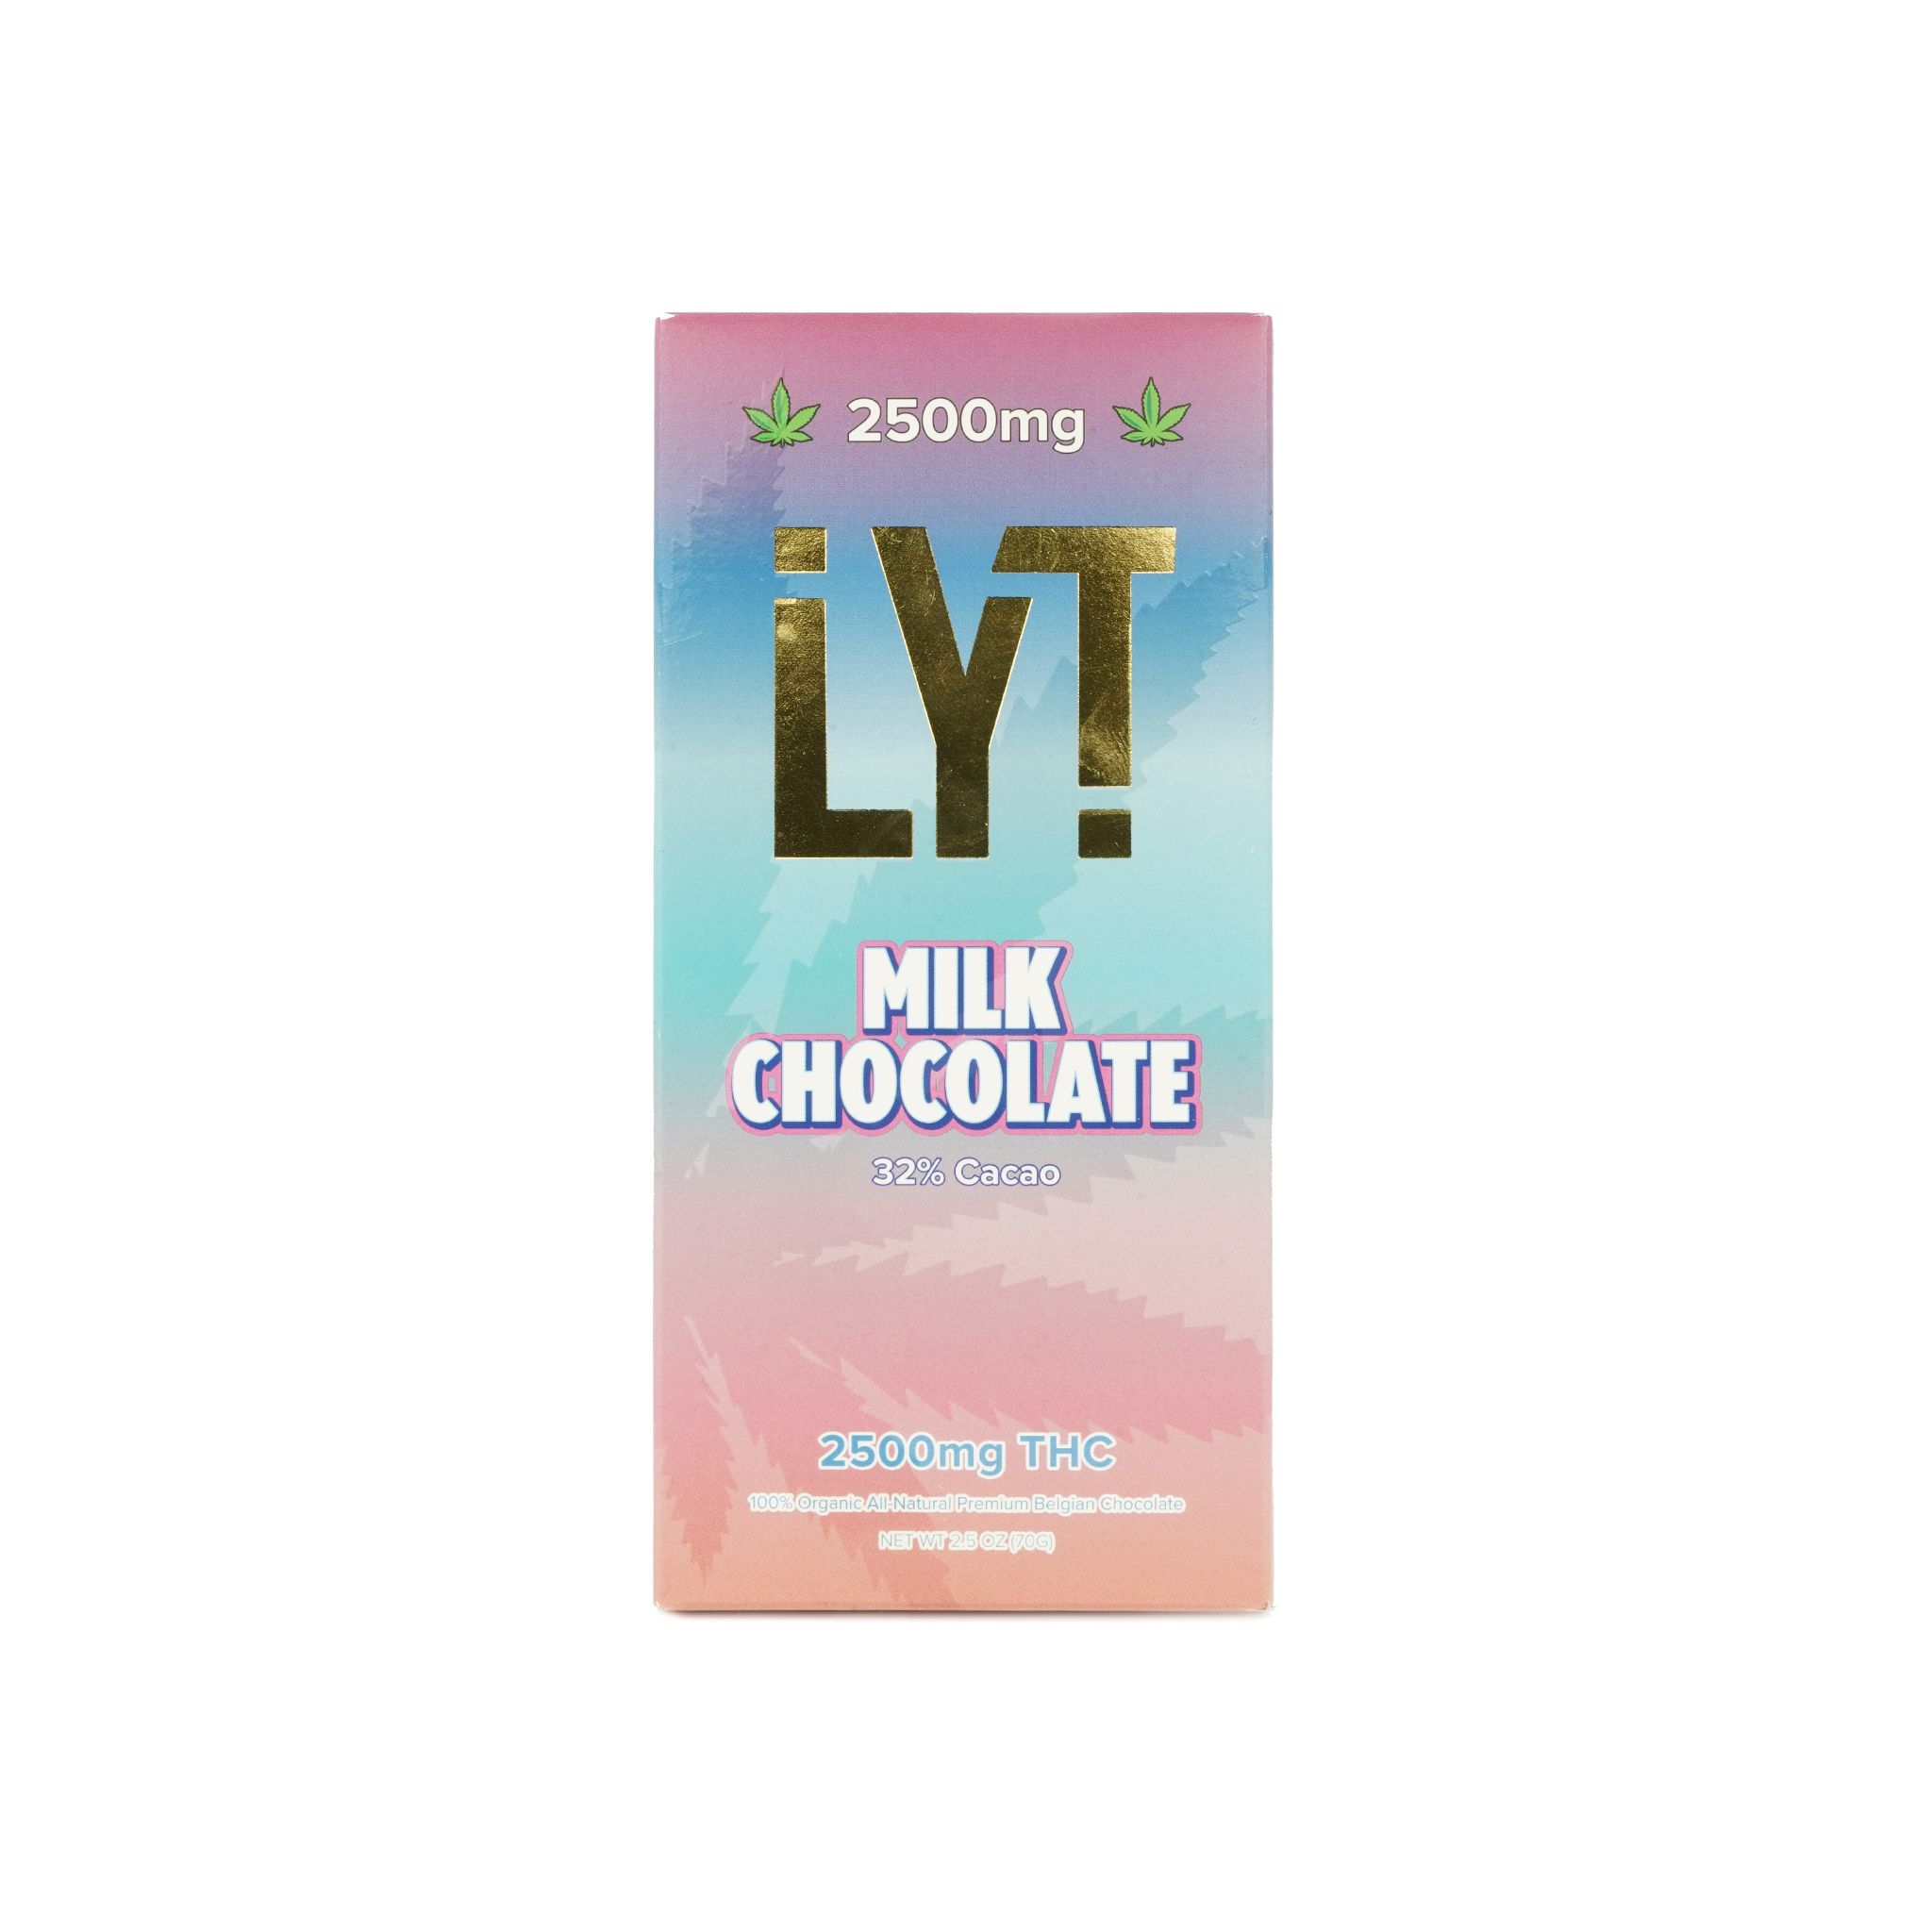 LYT-Milk-Chocolate-2500mg